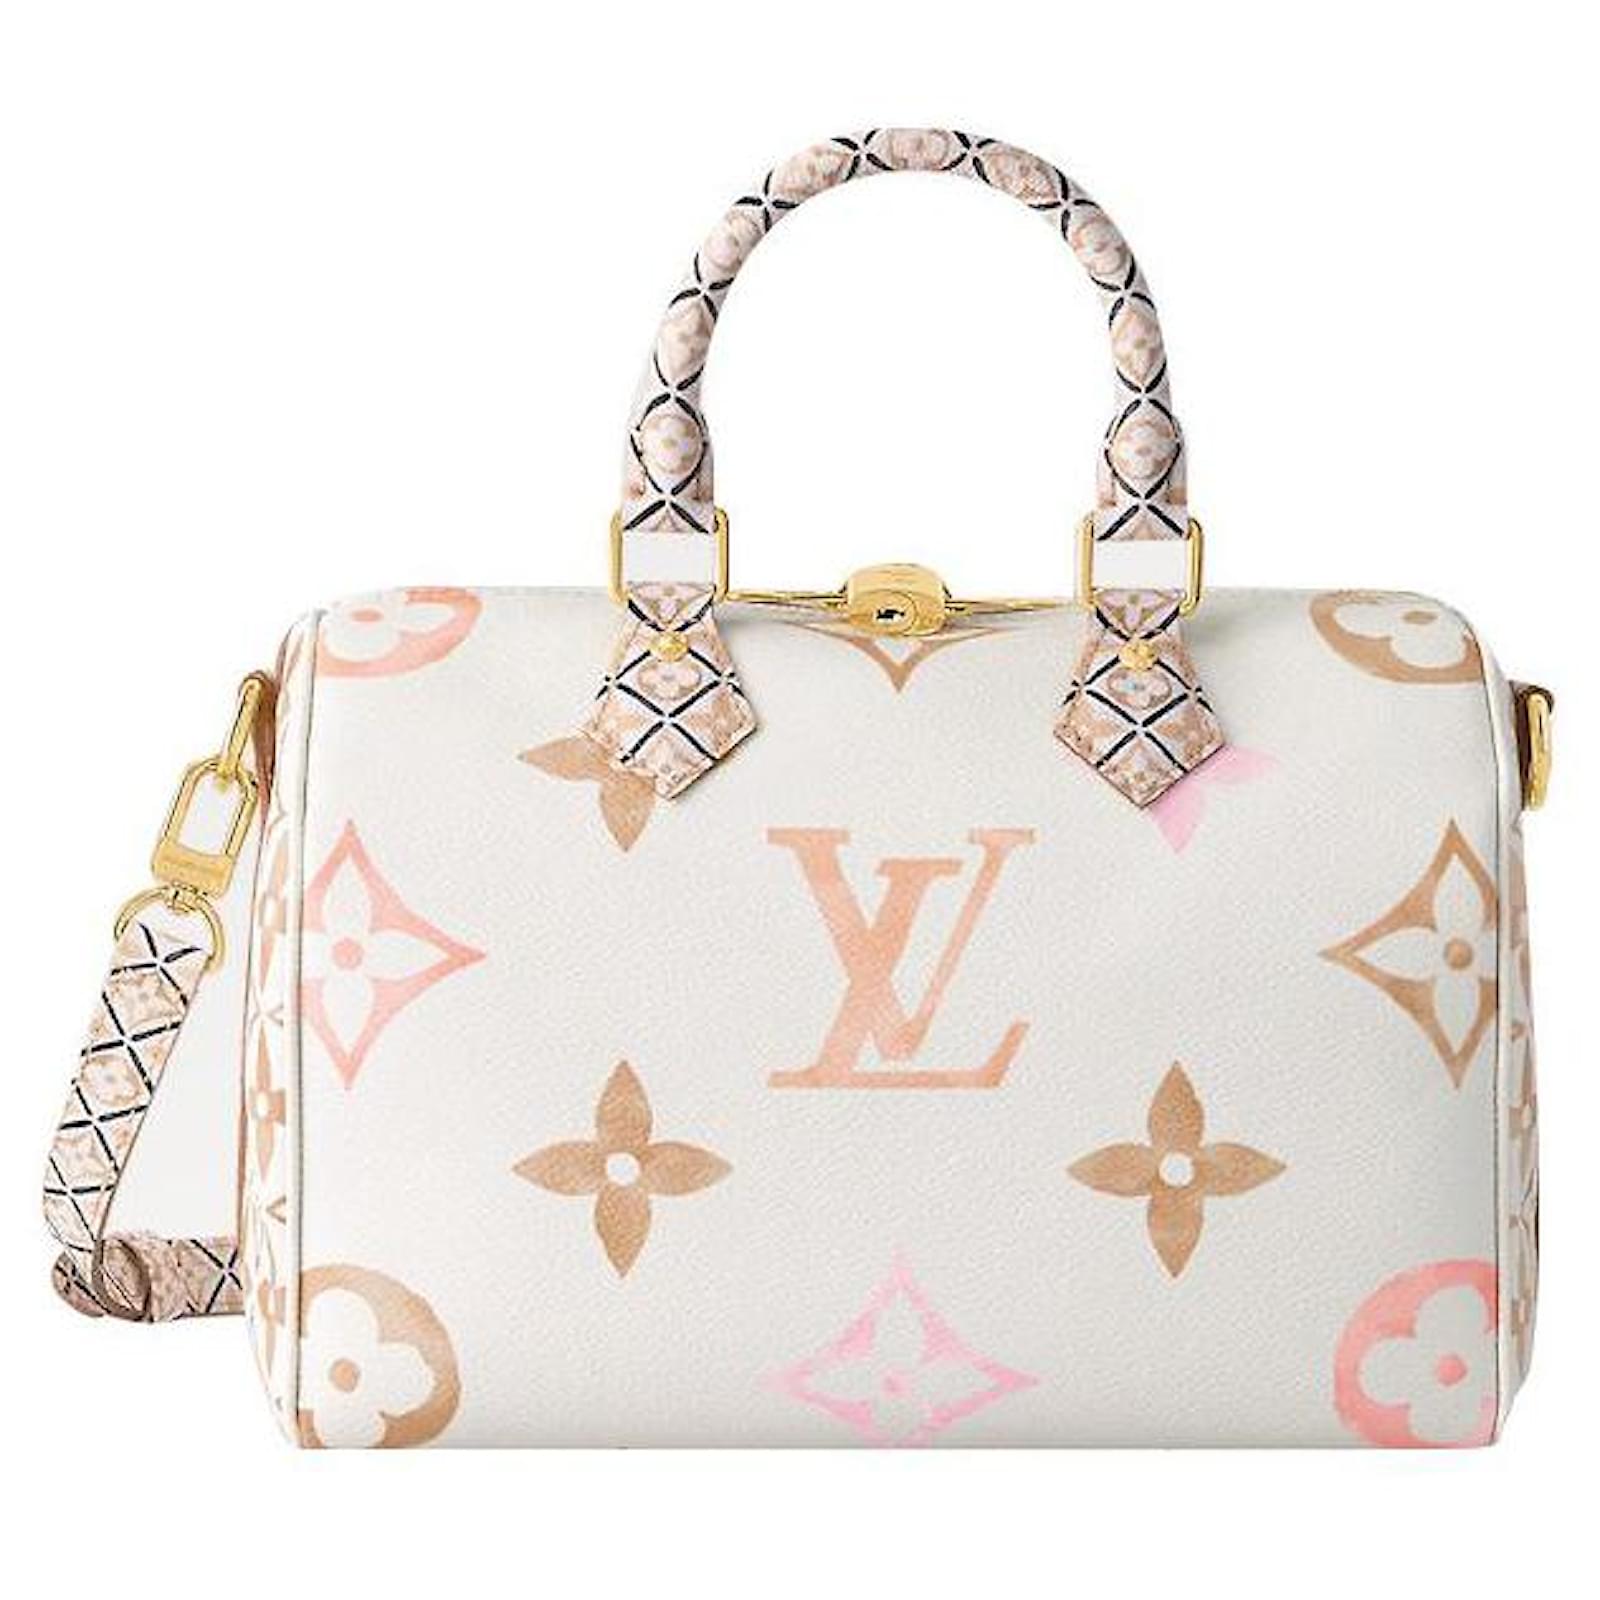 Handbags Louis Vuitton LV Speedy by The Pool New